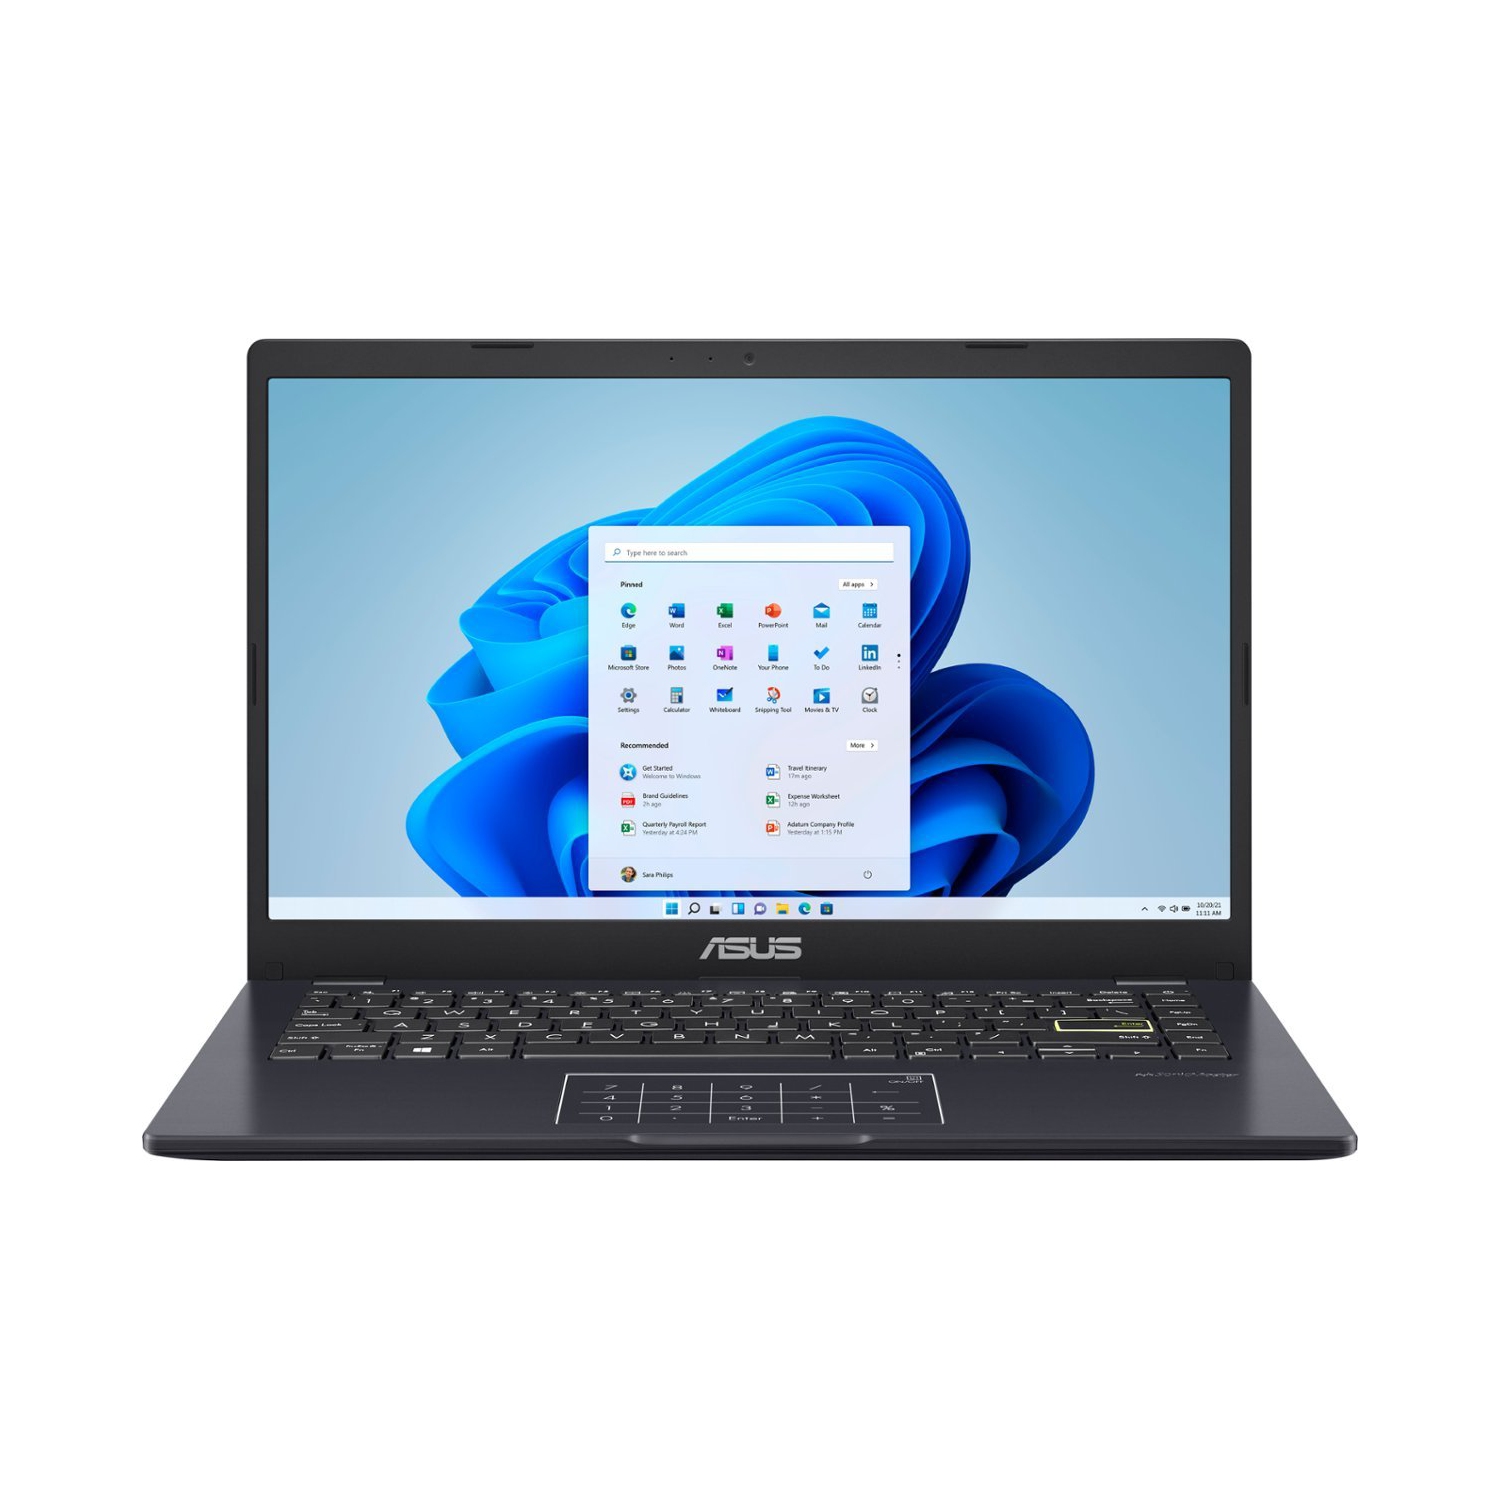 ASUS 14.0" HD Laptop (Intel Celeron N4020, 4GB RAM, 64GB eMMC, Windows 11) - Peacock Blue (E410MA-TB.CL464B)